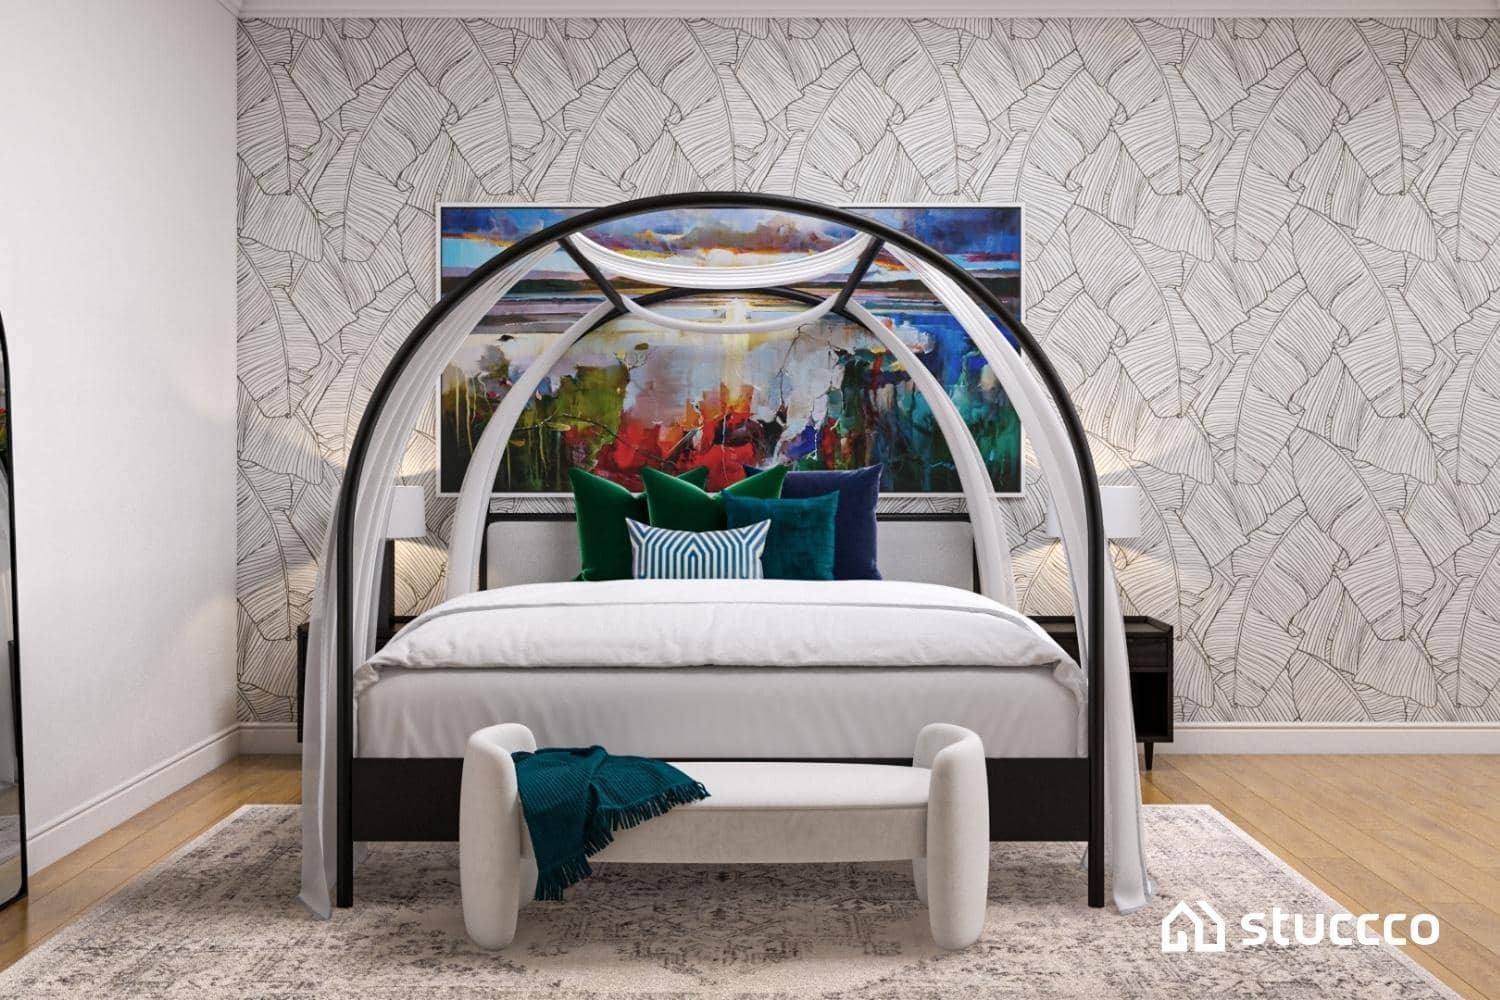 Bedding and wallpaper in Stuccco online interior design bedroom